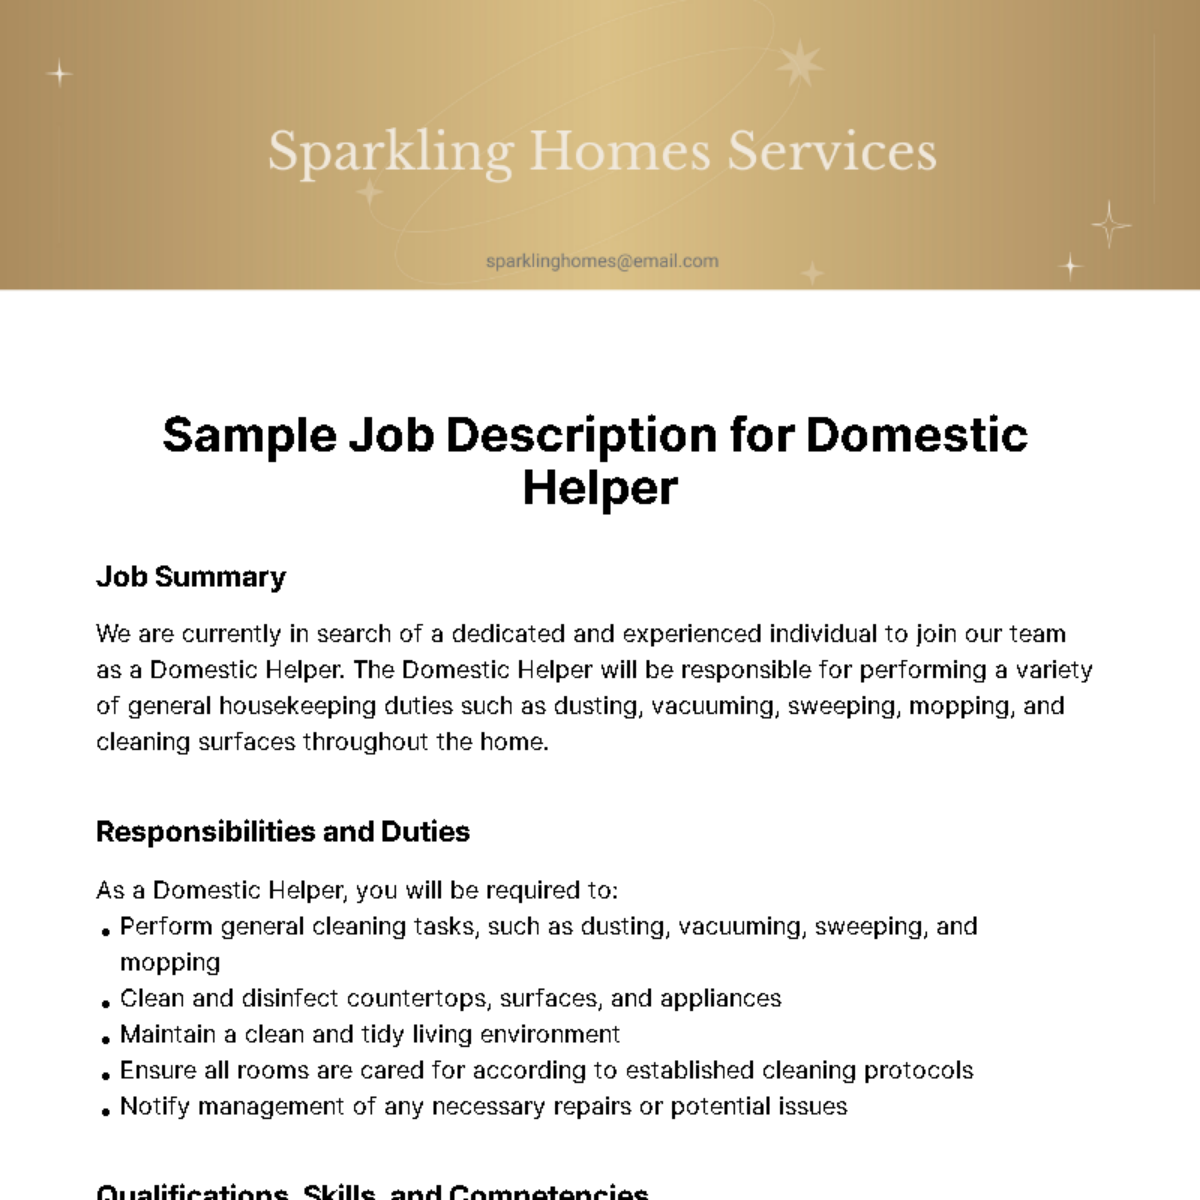 Sample Job Description for Domestic Helper Template